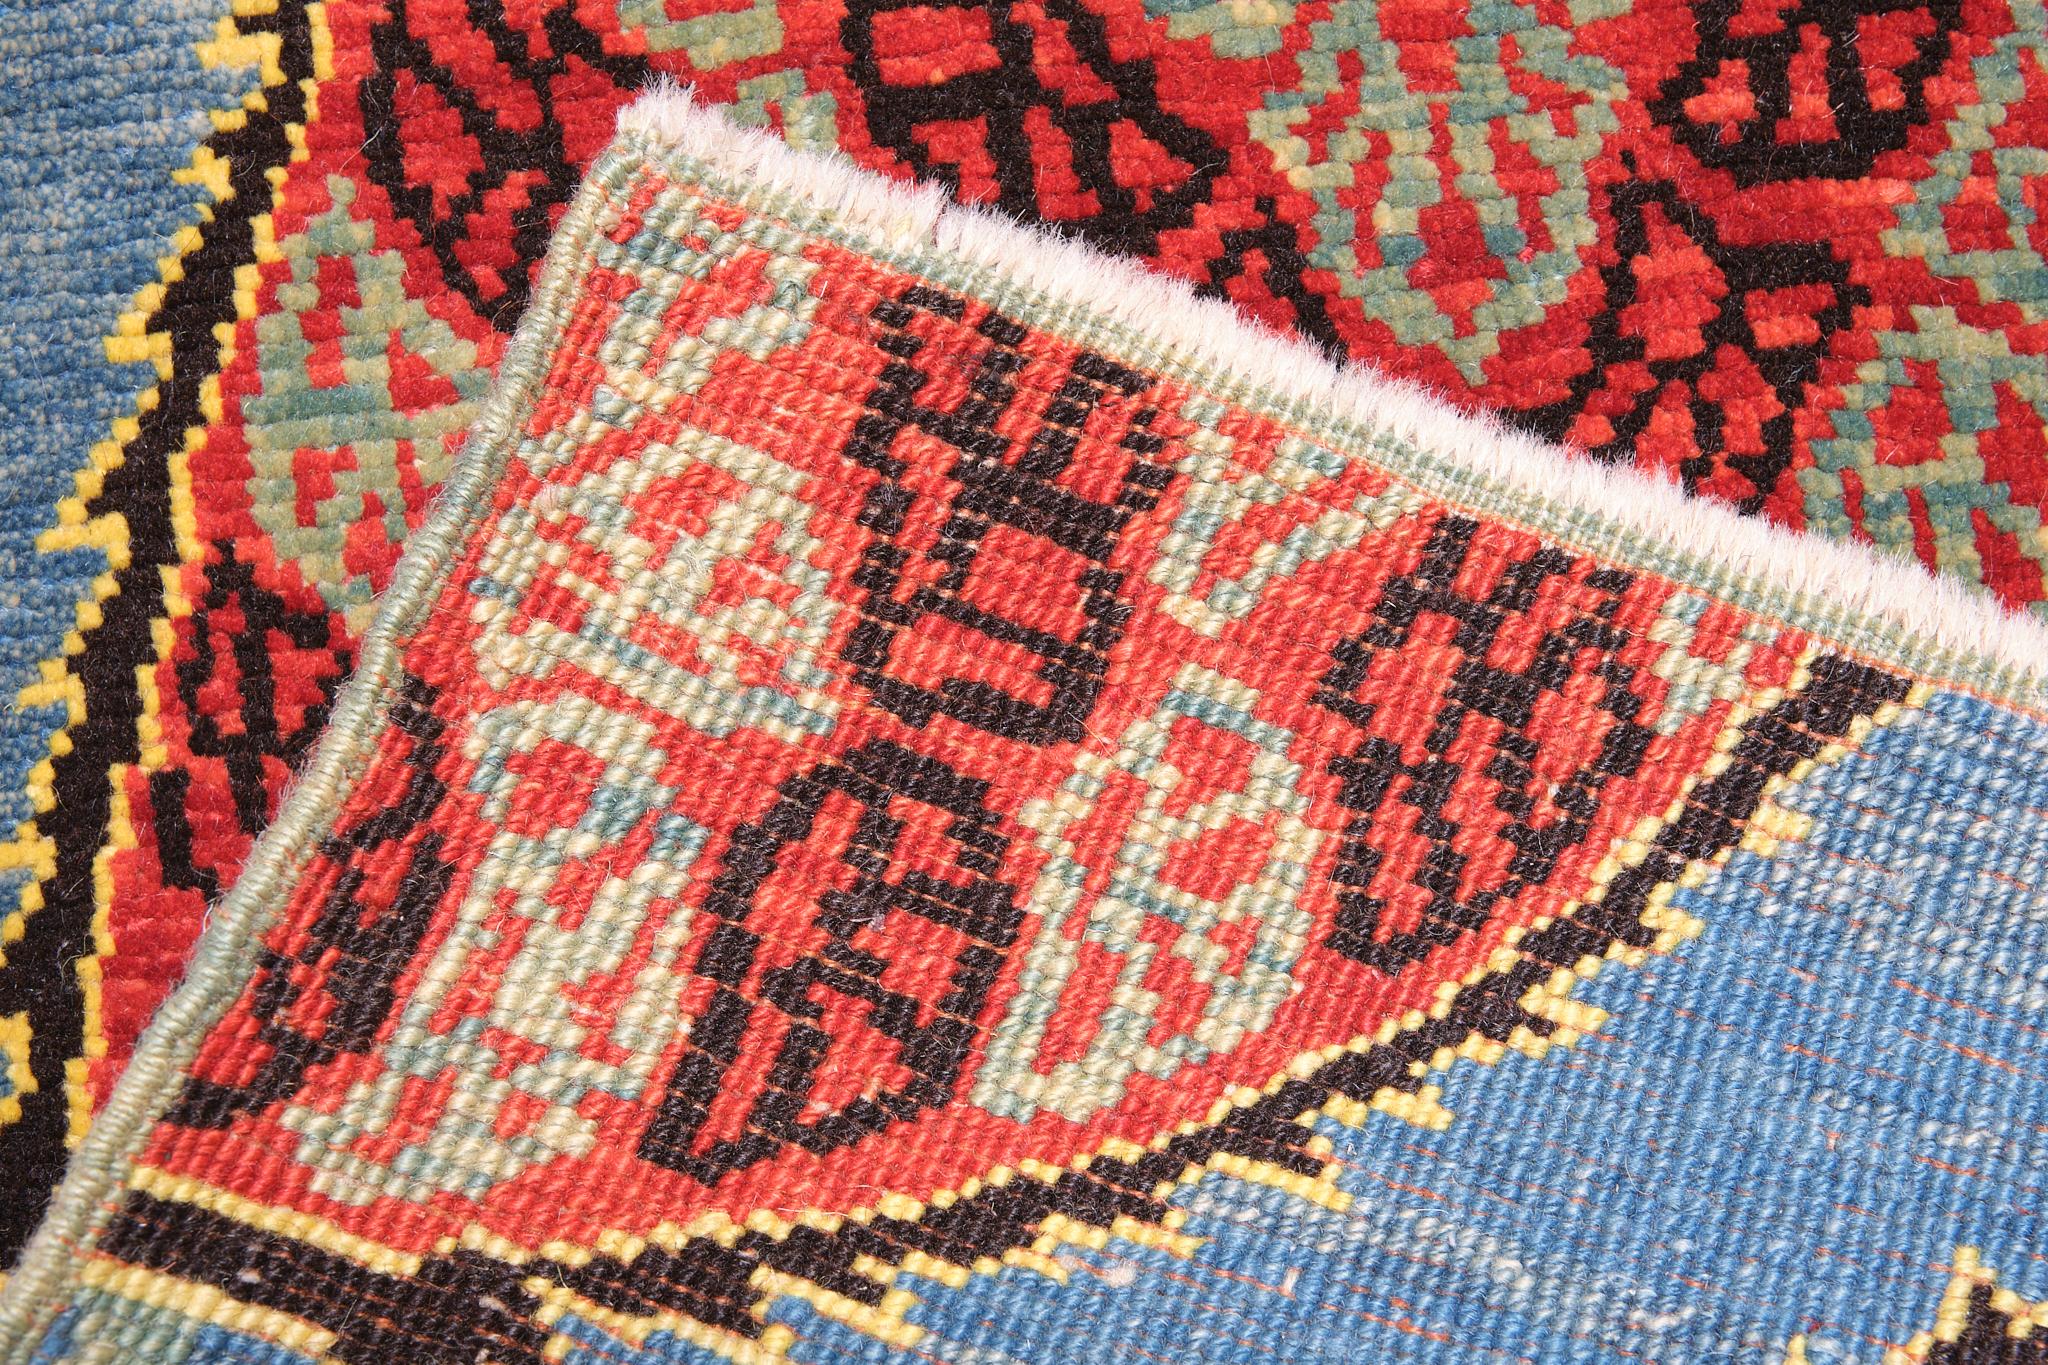 Vegetable Dyed Ararat Rugs Gerous Bidjar Wagireh Pendant Rug Revival Carpet Natural Dyed For Sale